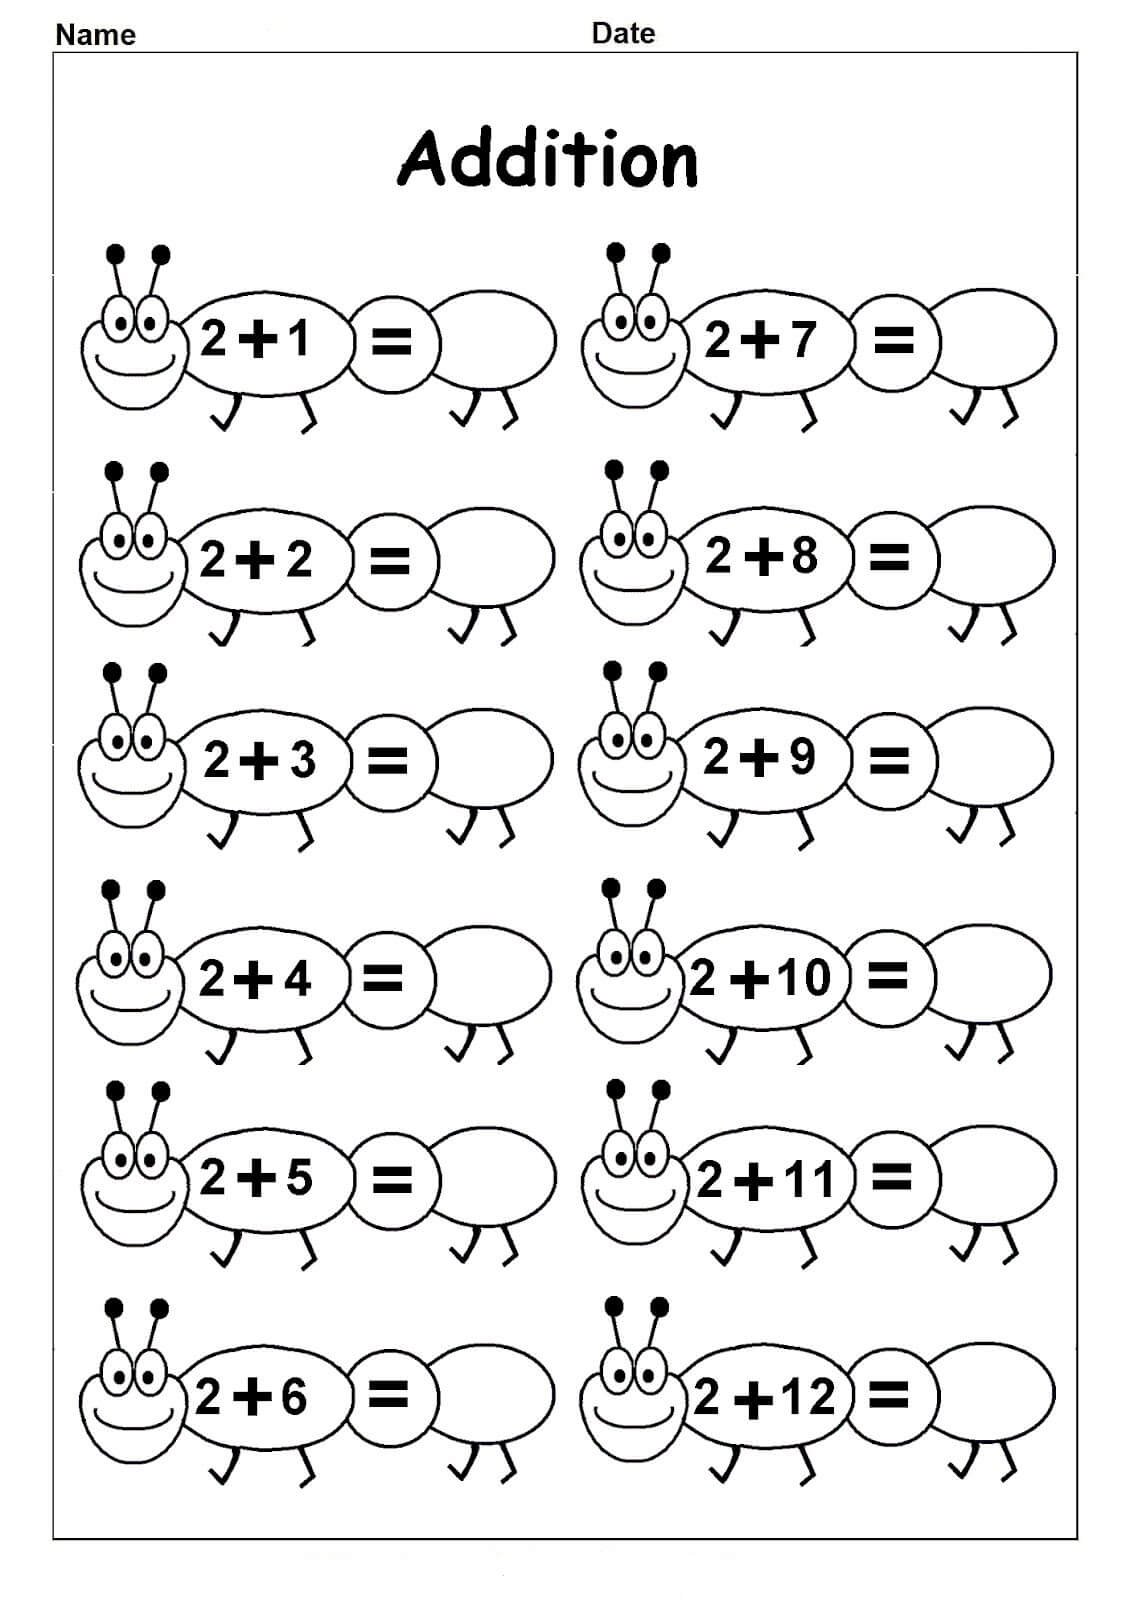 Free Printable Kindergarten Math Worksheets Picture Addition Beginner